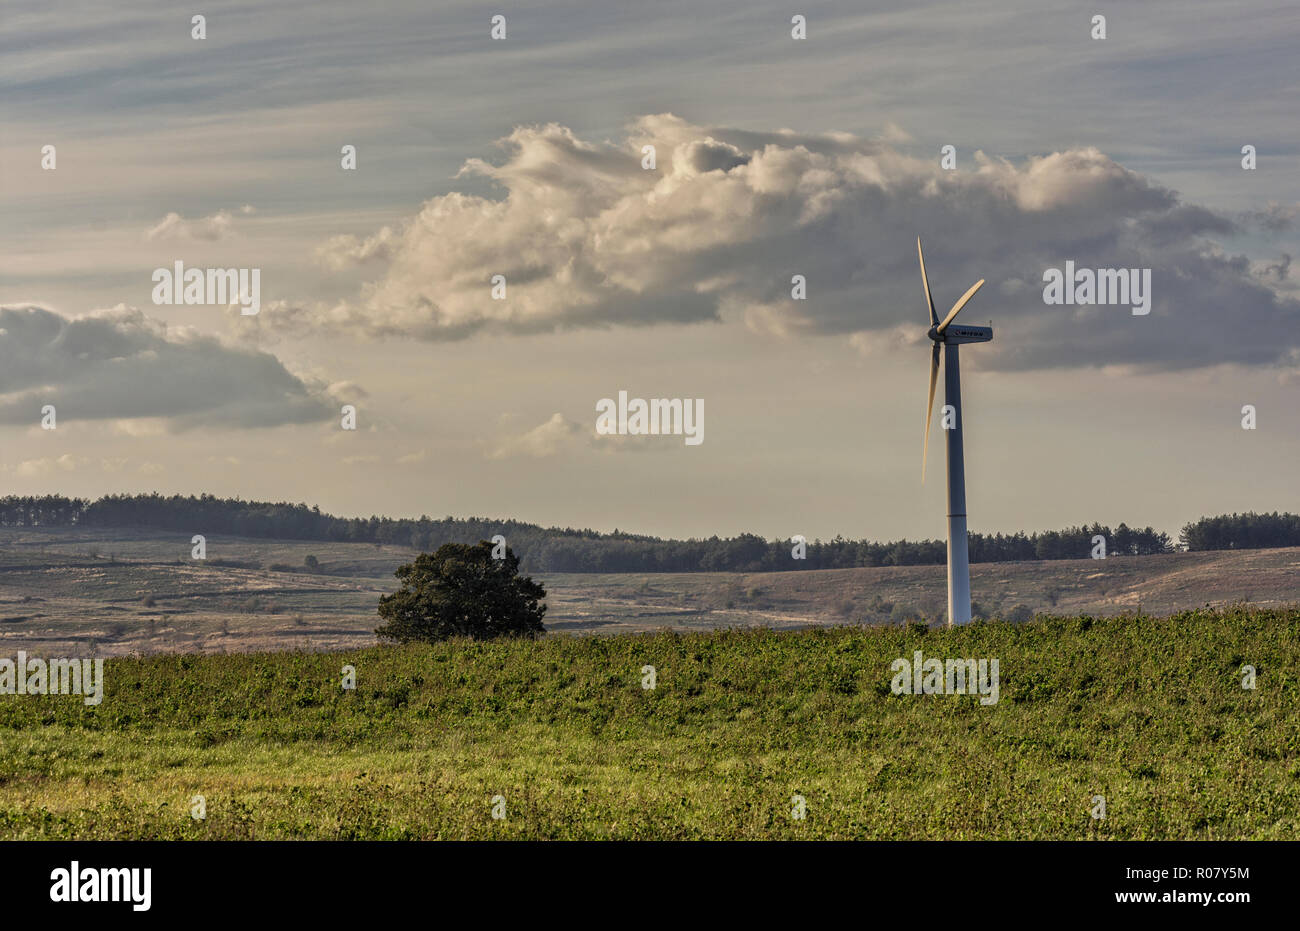 Wind turbine in the field. Stock Photo